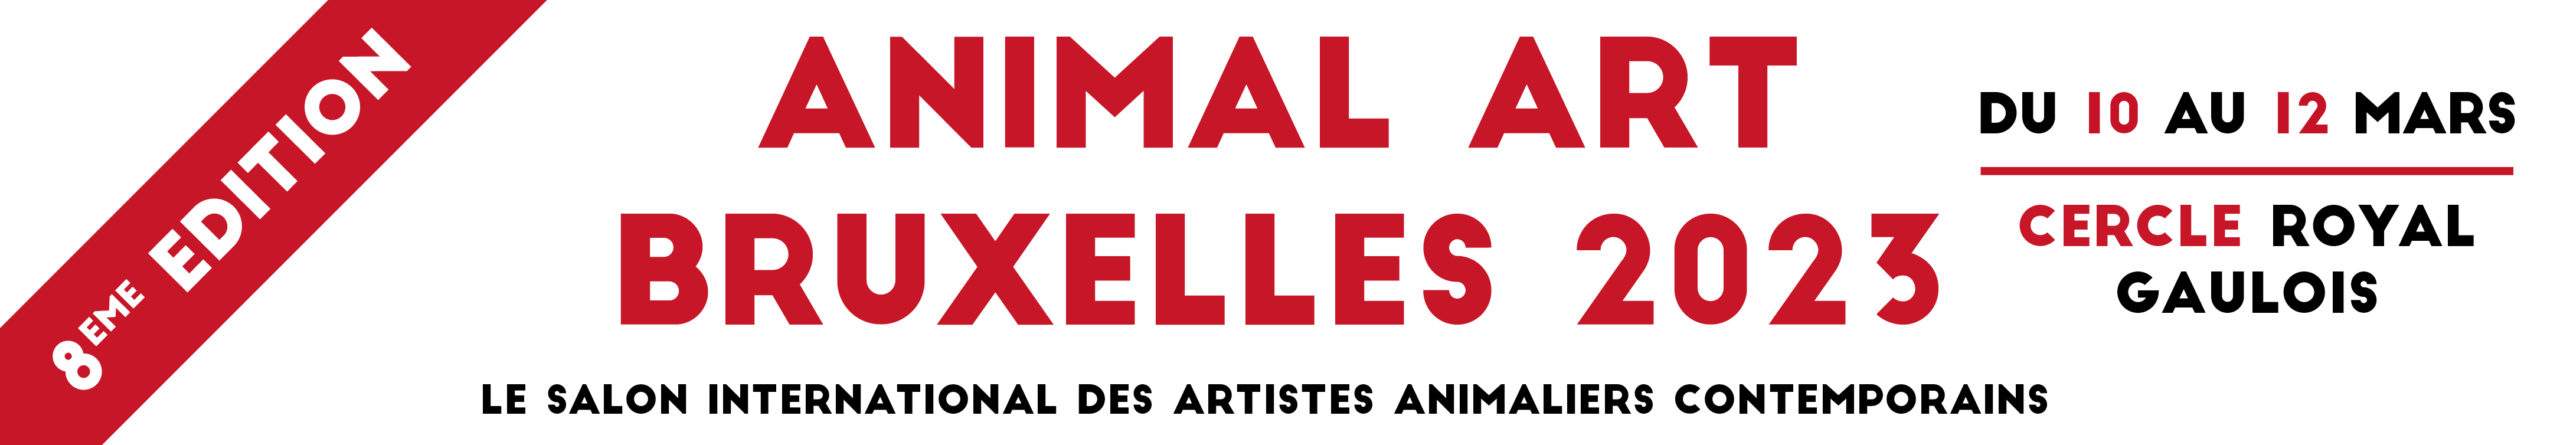 Animal Art Bruxelles